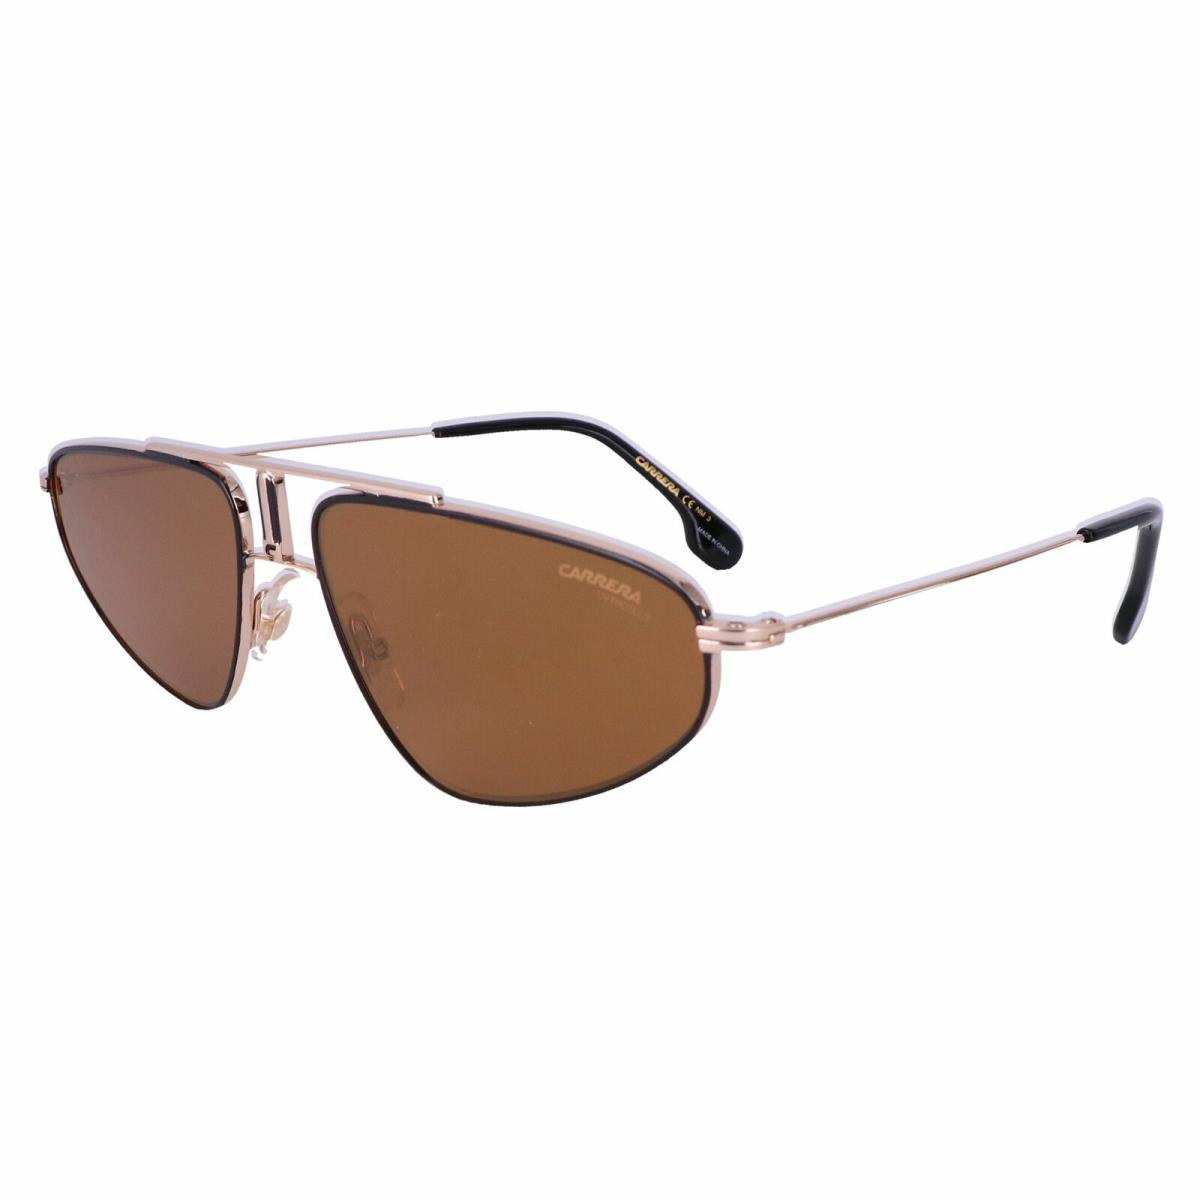 Carrera 1021/S J5G 58-16-145 Brown Gold Metal Vintage Look Sunglasses